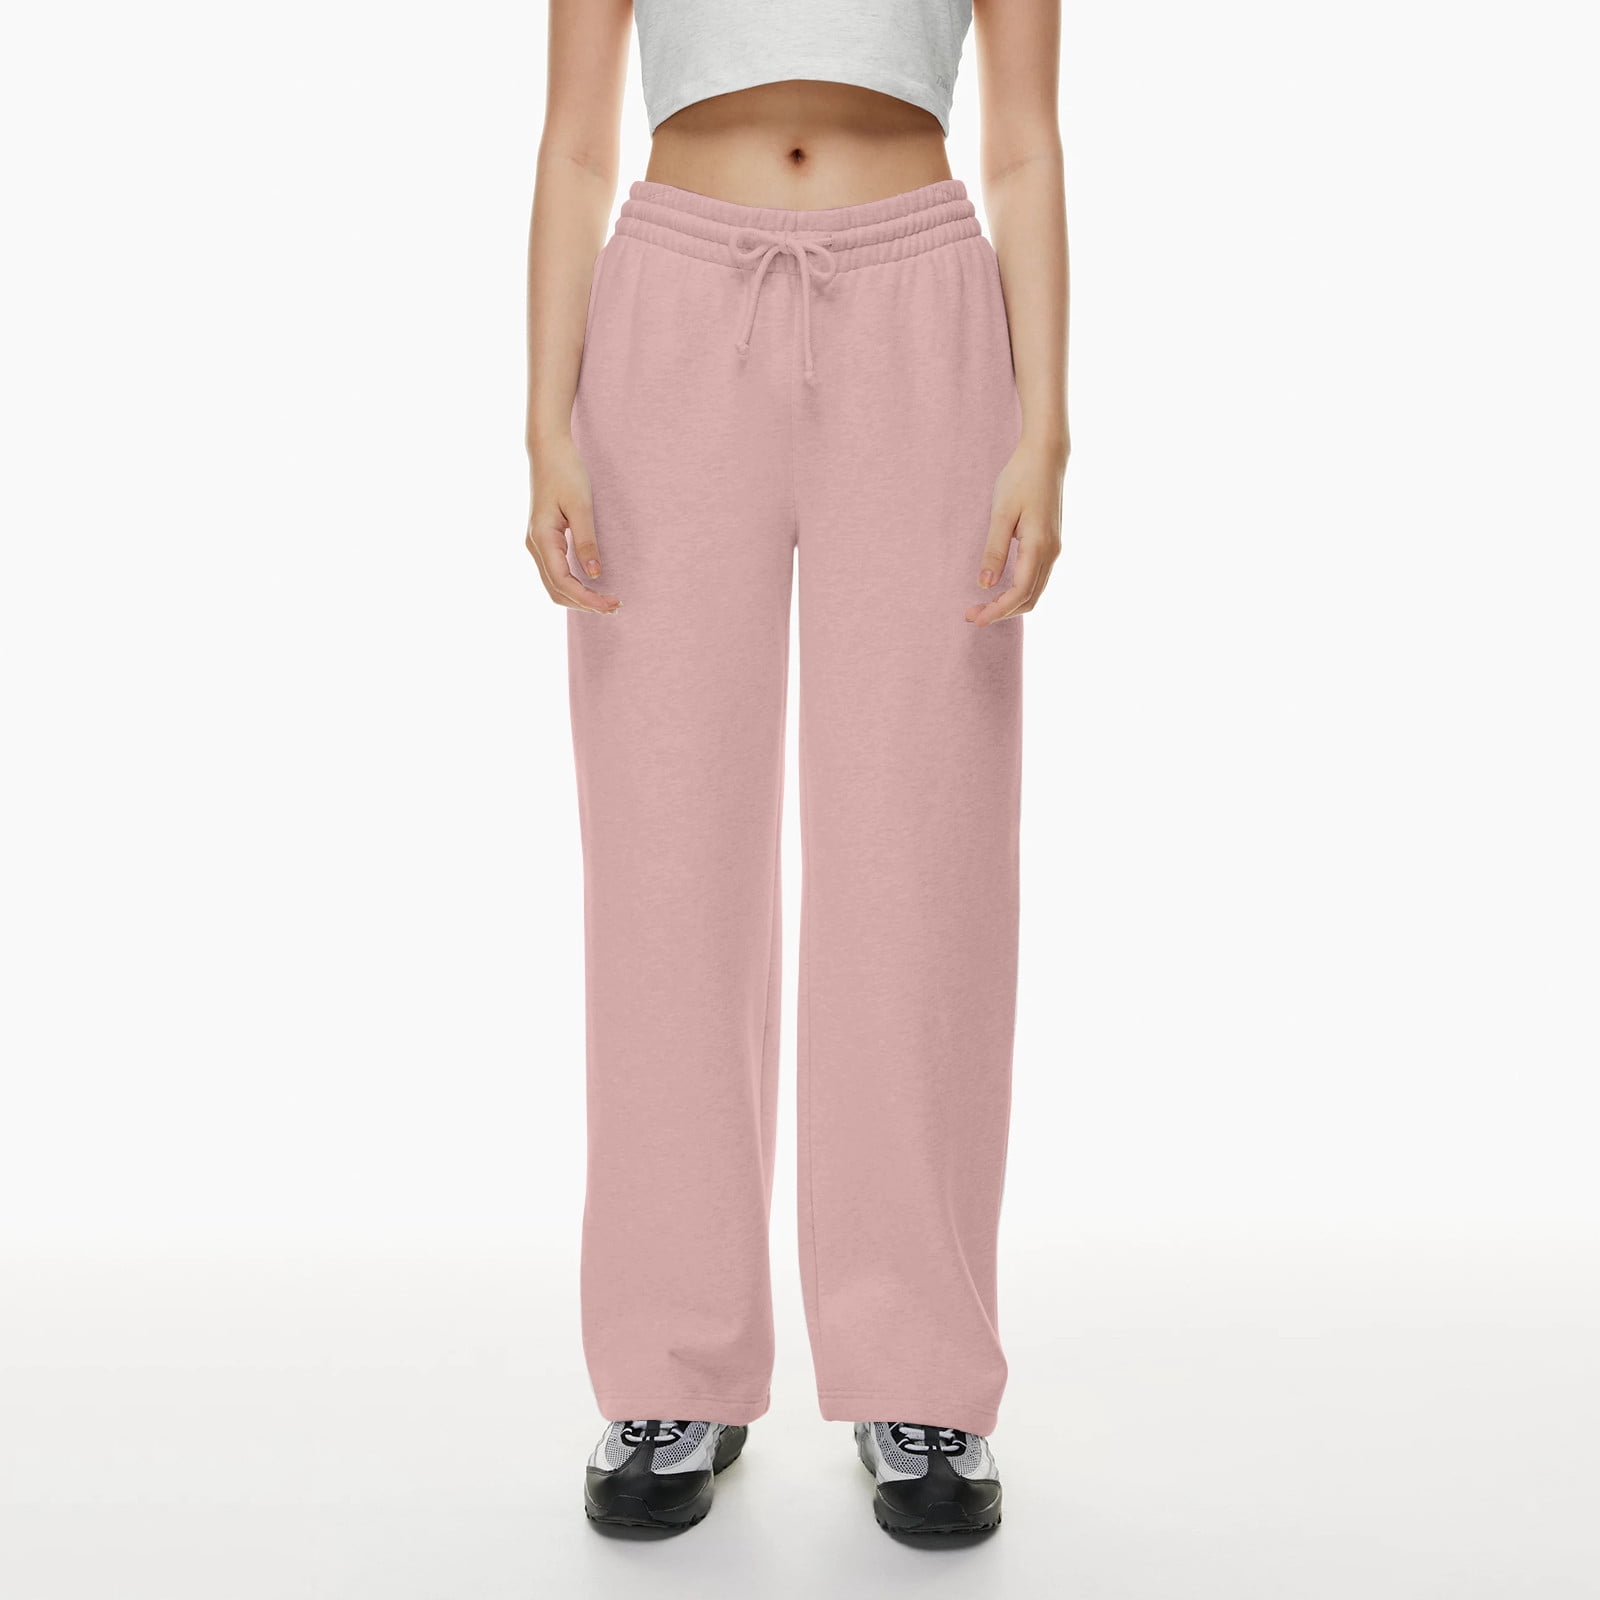 Susanny Sweatpants for Girls Straight Leg with Pockets Fleece